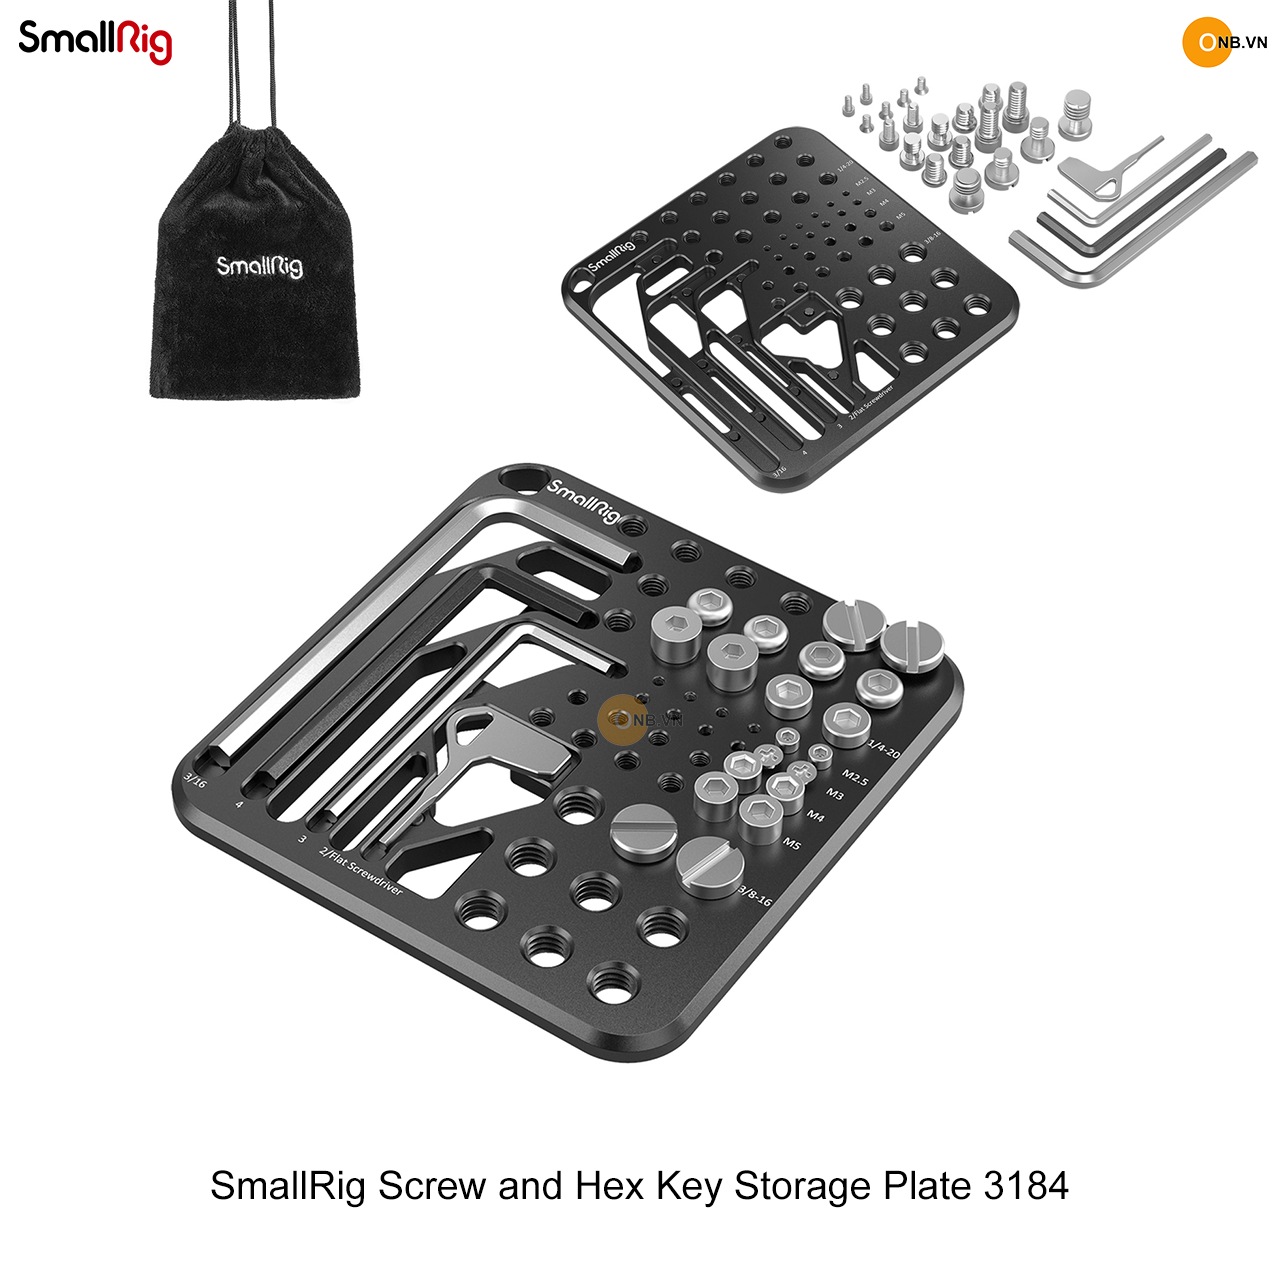 SmallRig Screw and Hex Key Storage Plate 3184